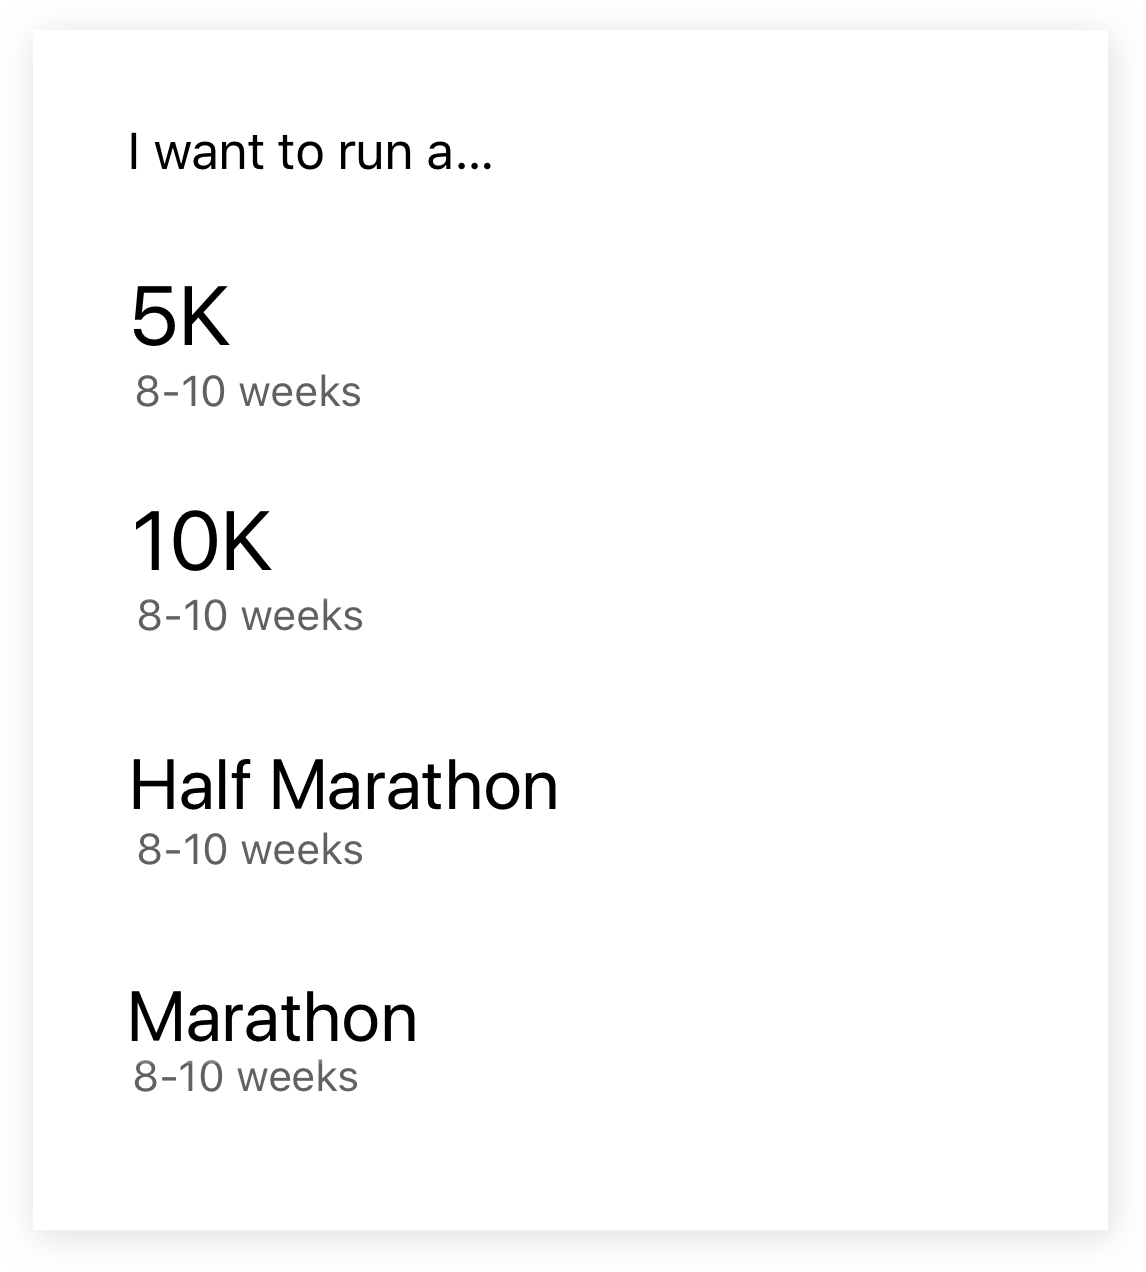 Screenshot from the Runkeeper app of training plan choices for 5k, 10k, Half Marathon and Marathon.

